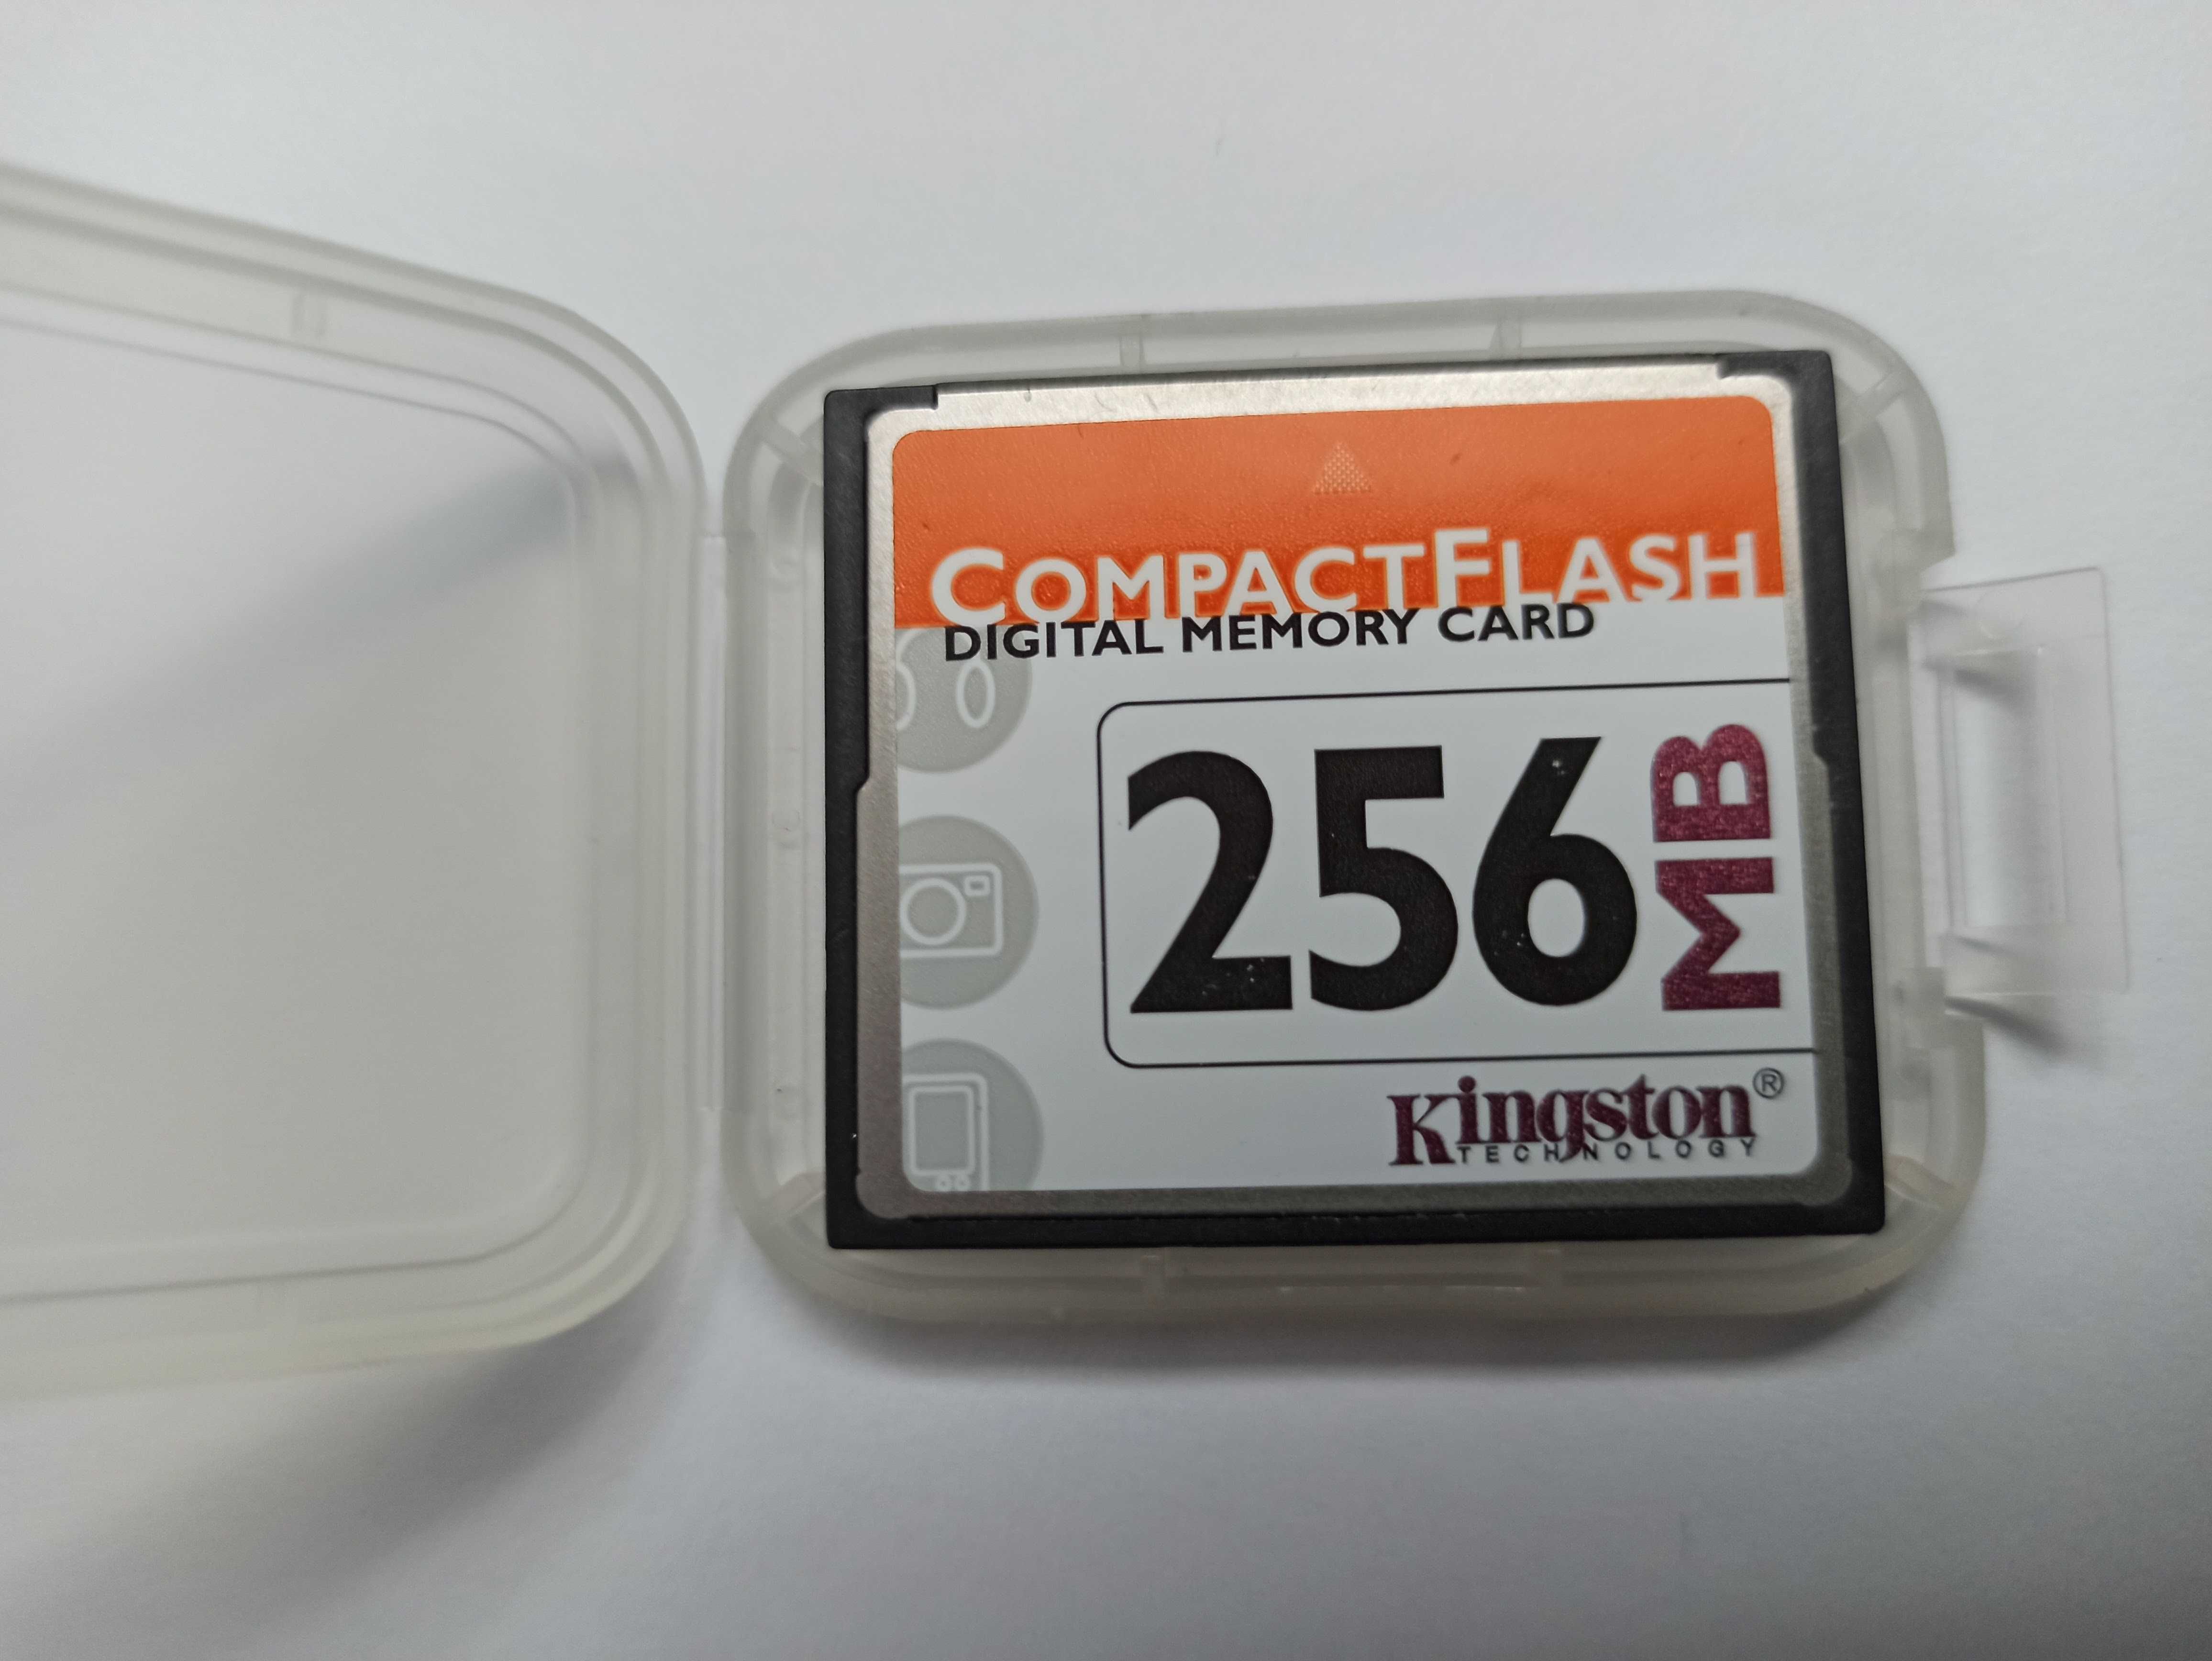 Compact Flash 256 MB